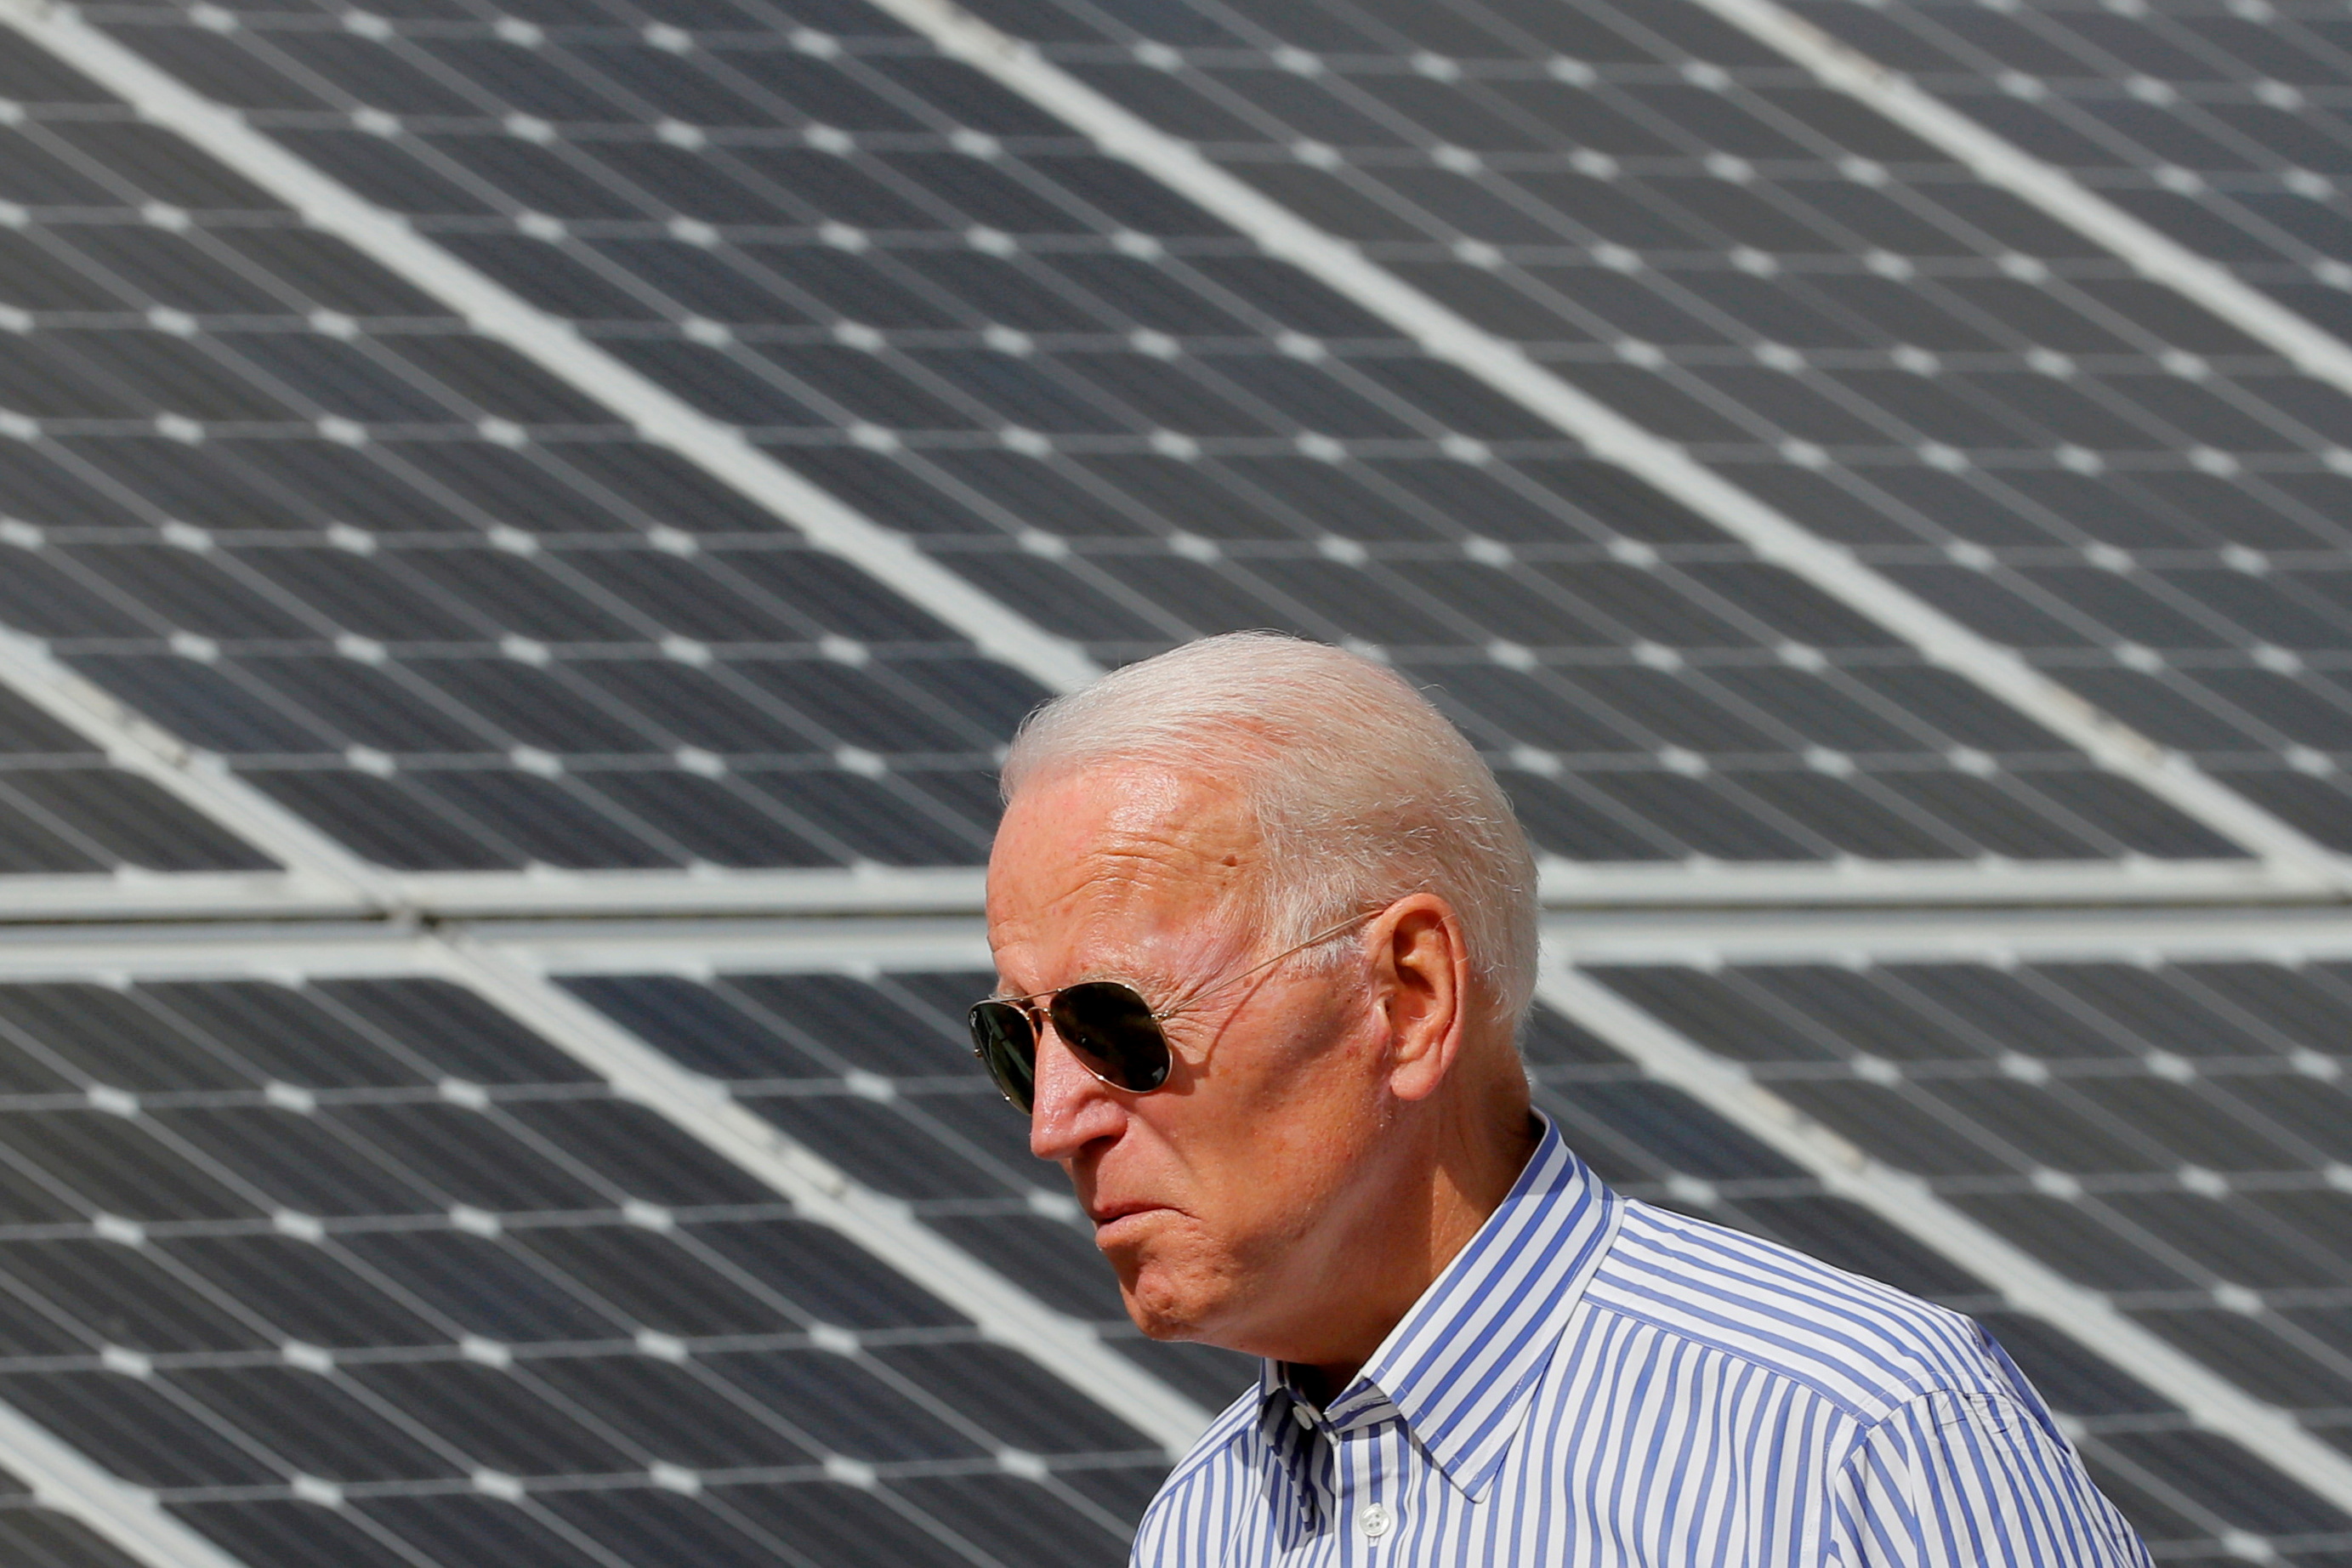 Joe Biden walks past solar panels in Plymouth, New Hampshire